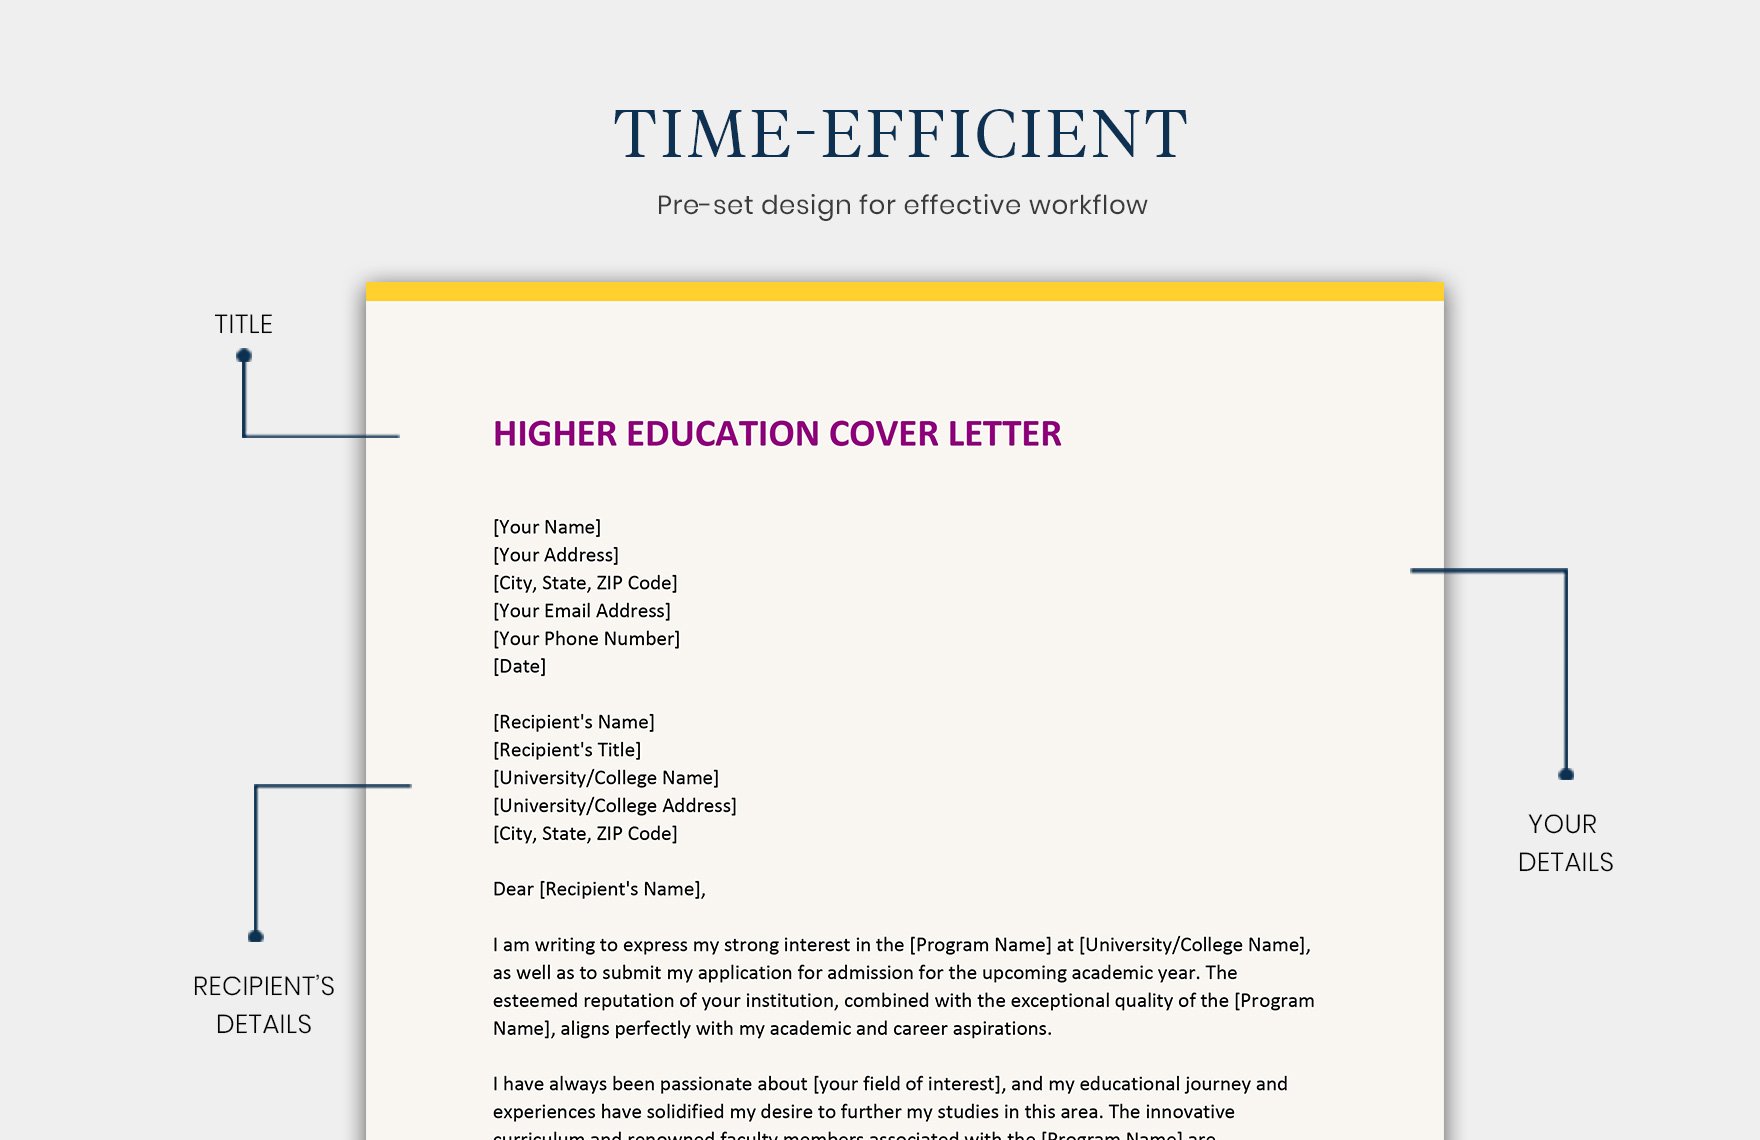 Higher Education Cover Letter